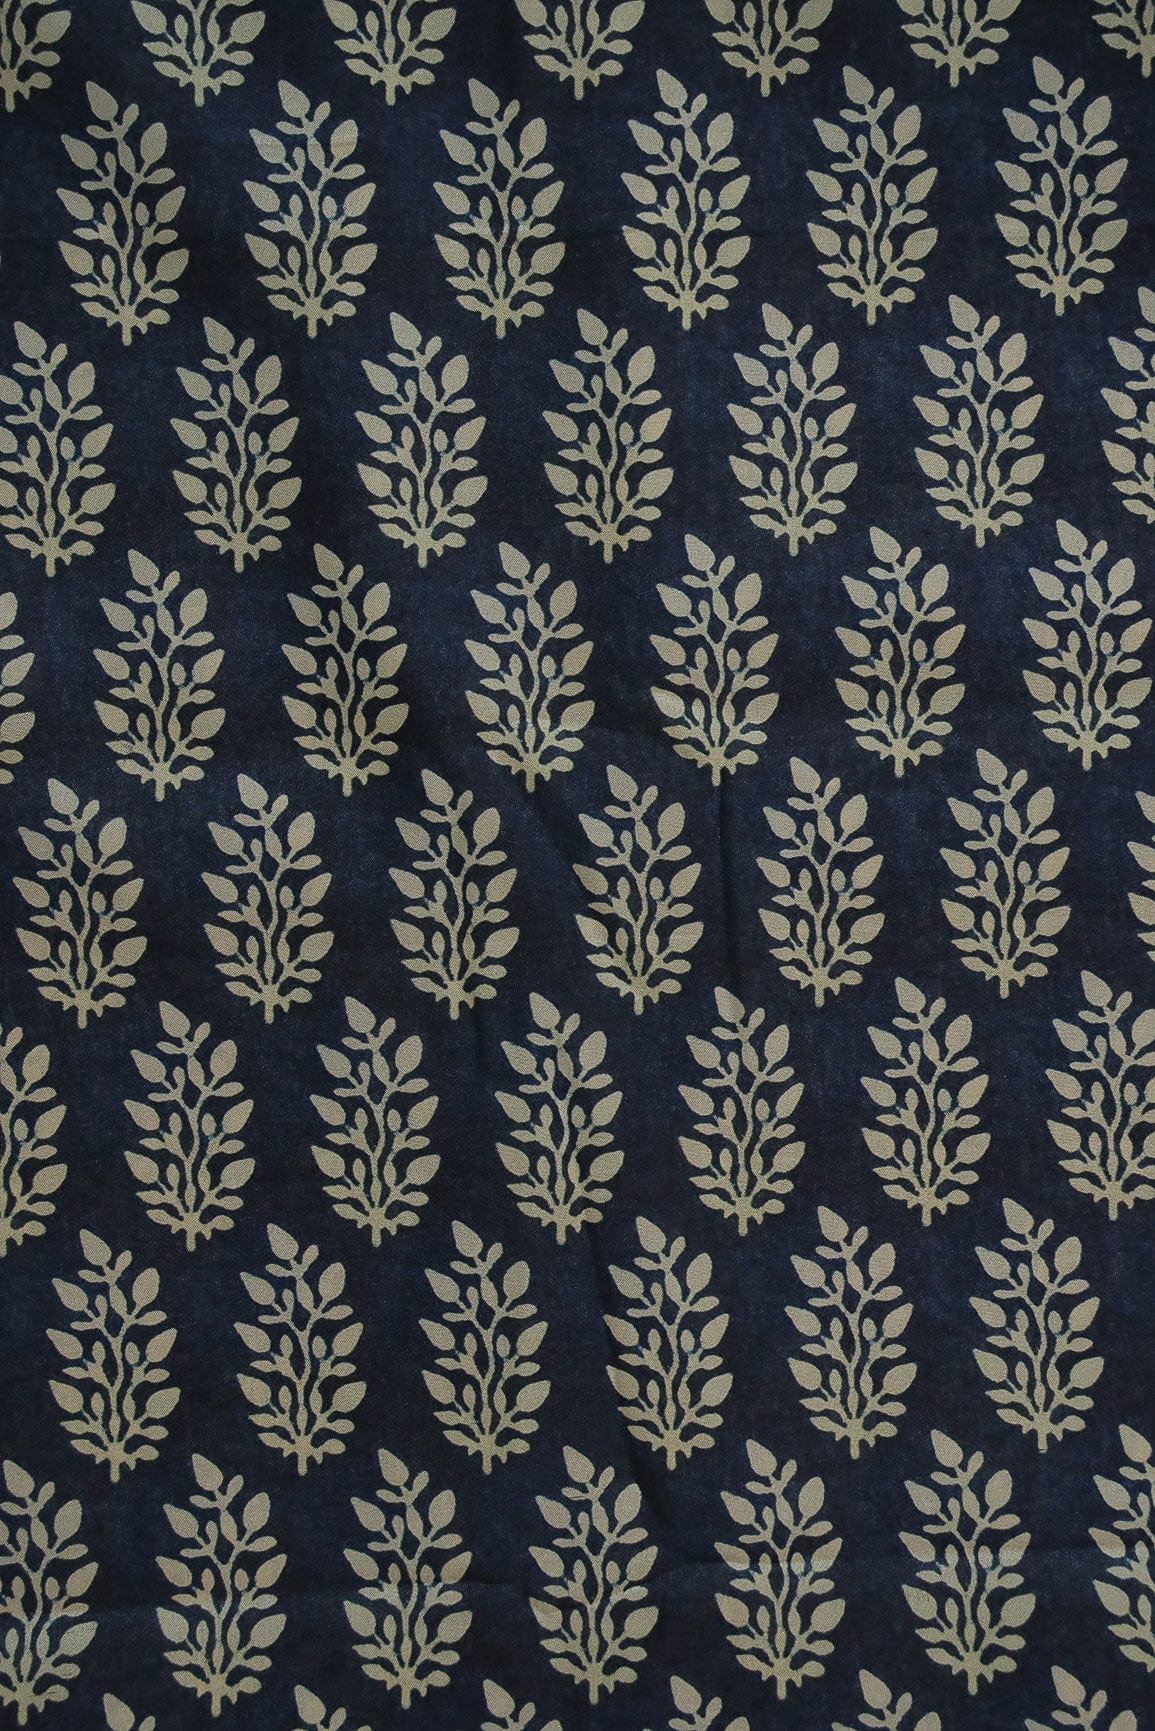 doeraa Prints Leafy Motif Digital Print Design on Blue Tussar Silk Fabric